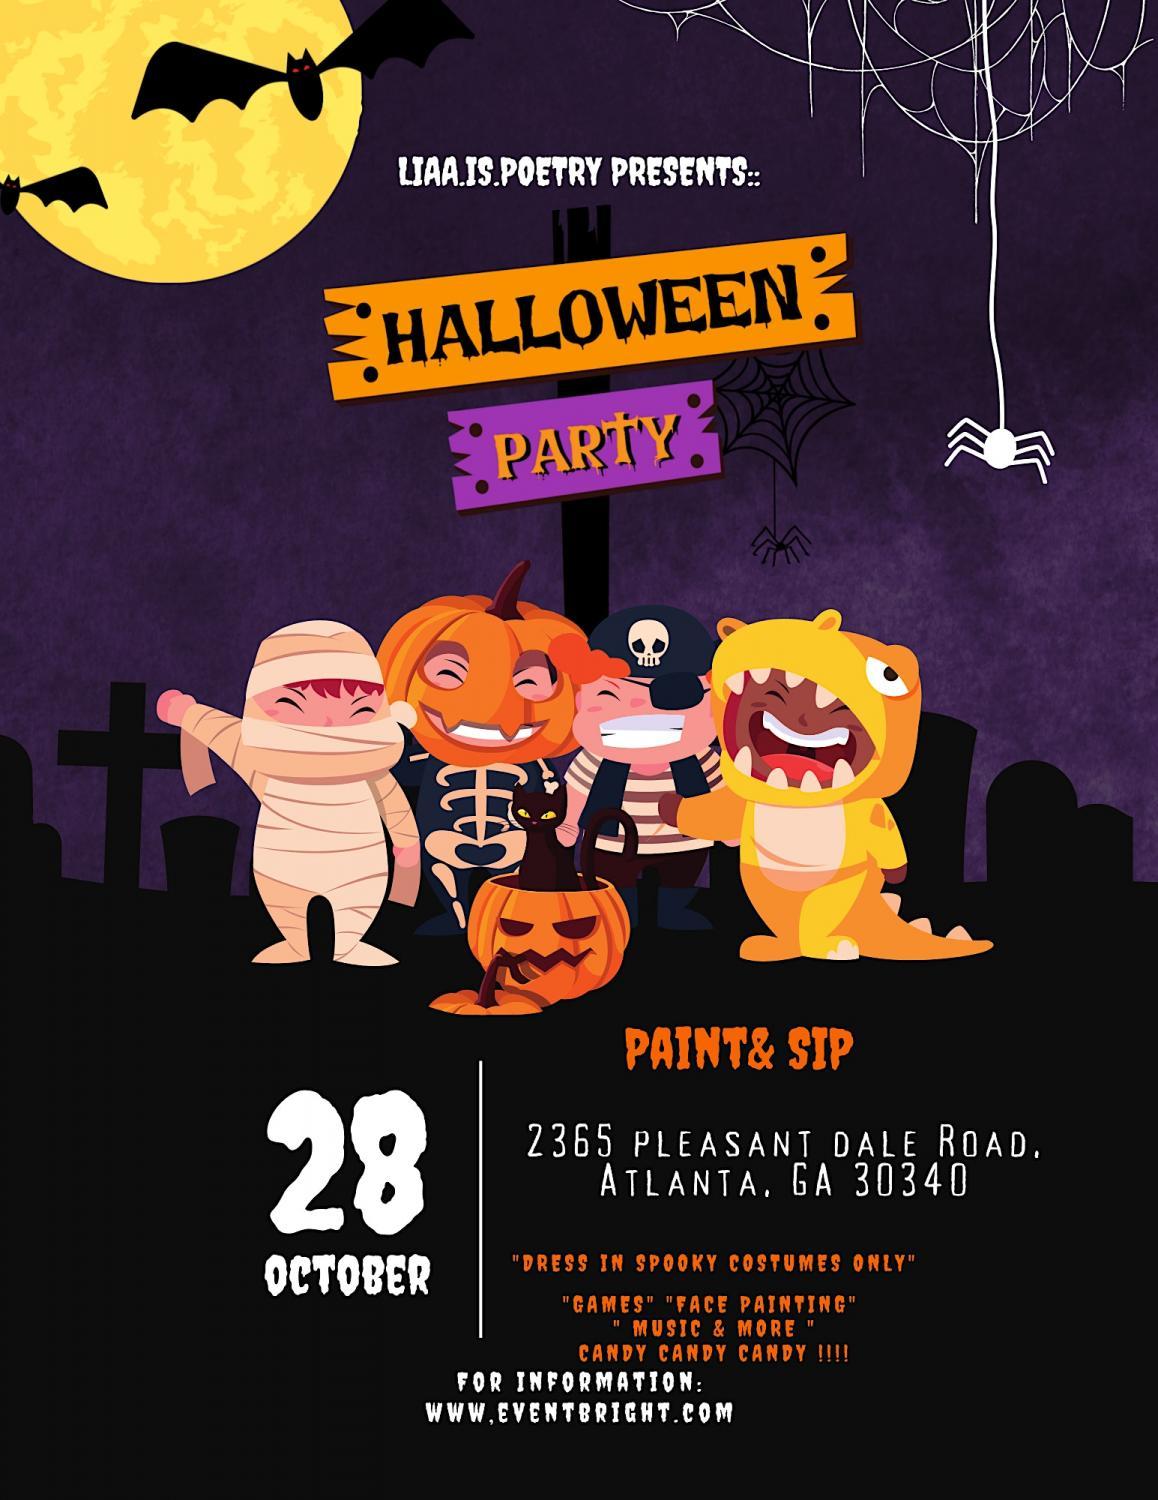 Halloween Town Paint & Sip (Kids)
Fri Oct 28, 7:00 PM - Fri Oct 28, 9:00 PM
in 8 days